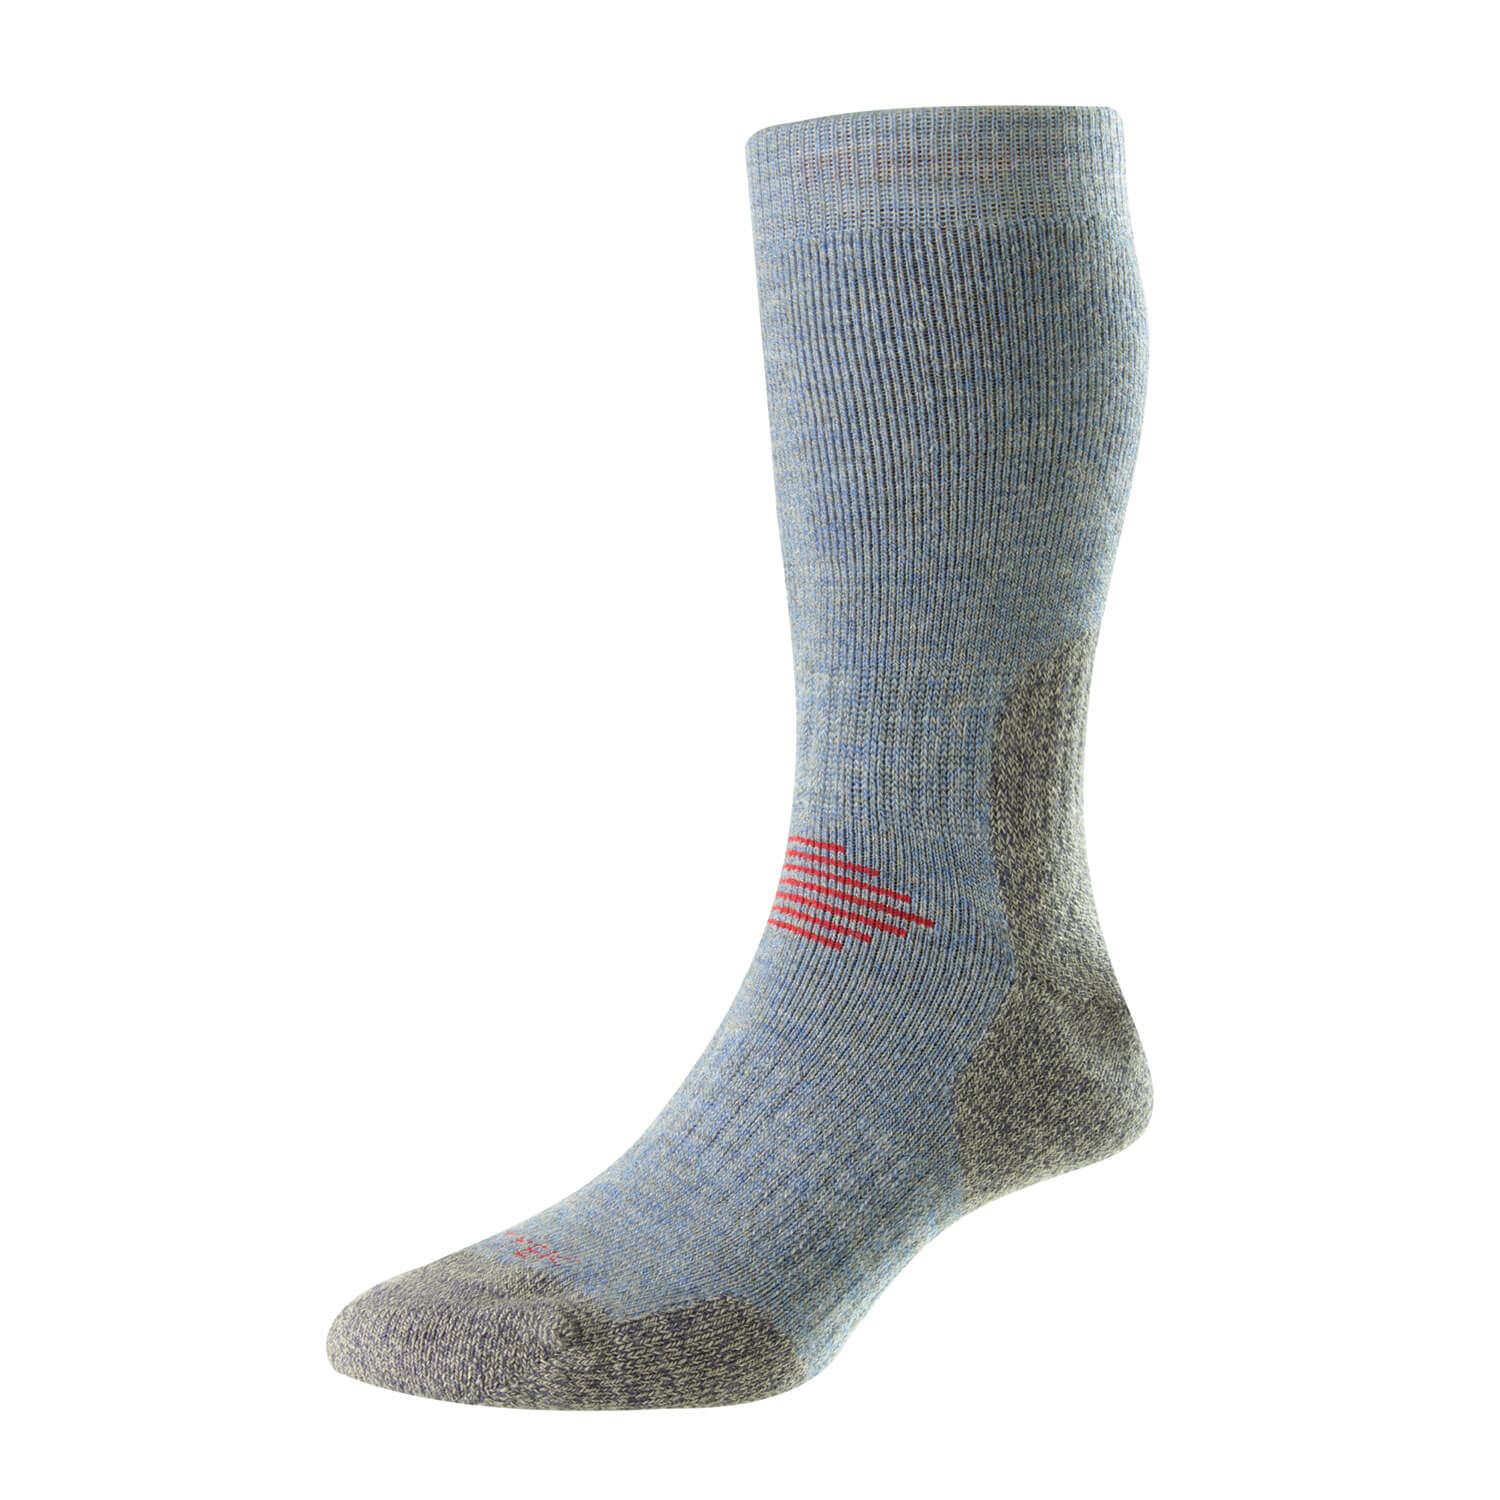 Protrek Mountain Climb Socks - Denim Grey 1 Shaws Department Stores